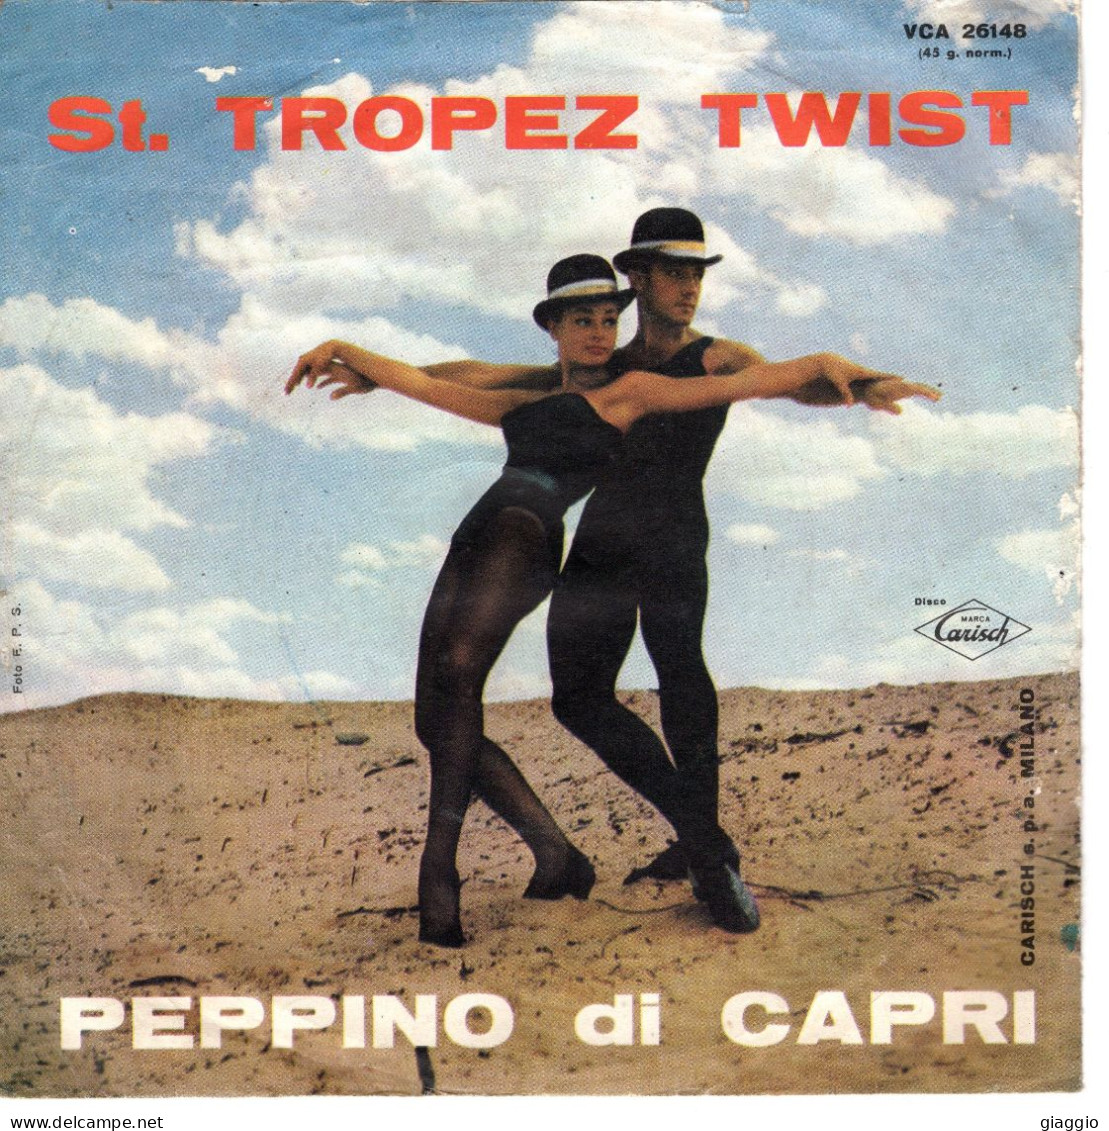 °°° 520) 45 GIRI - PEPPINO DI CAPRI - DANIELA / ST. TROPEZ TWIST °°° - Otros - Canción Italiana